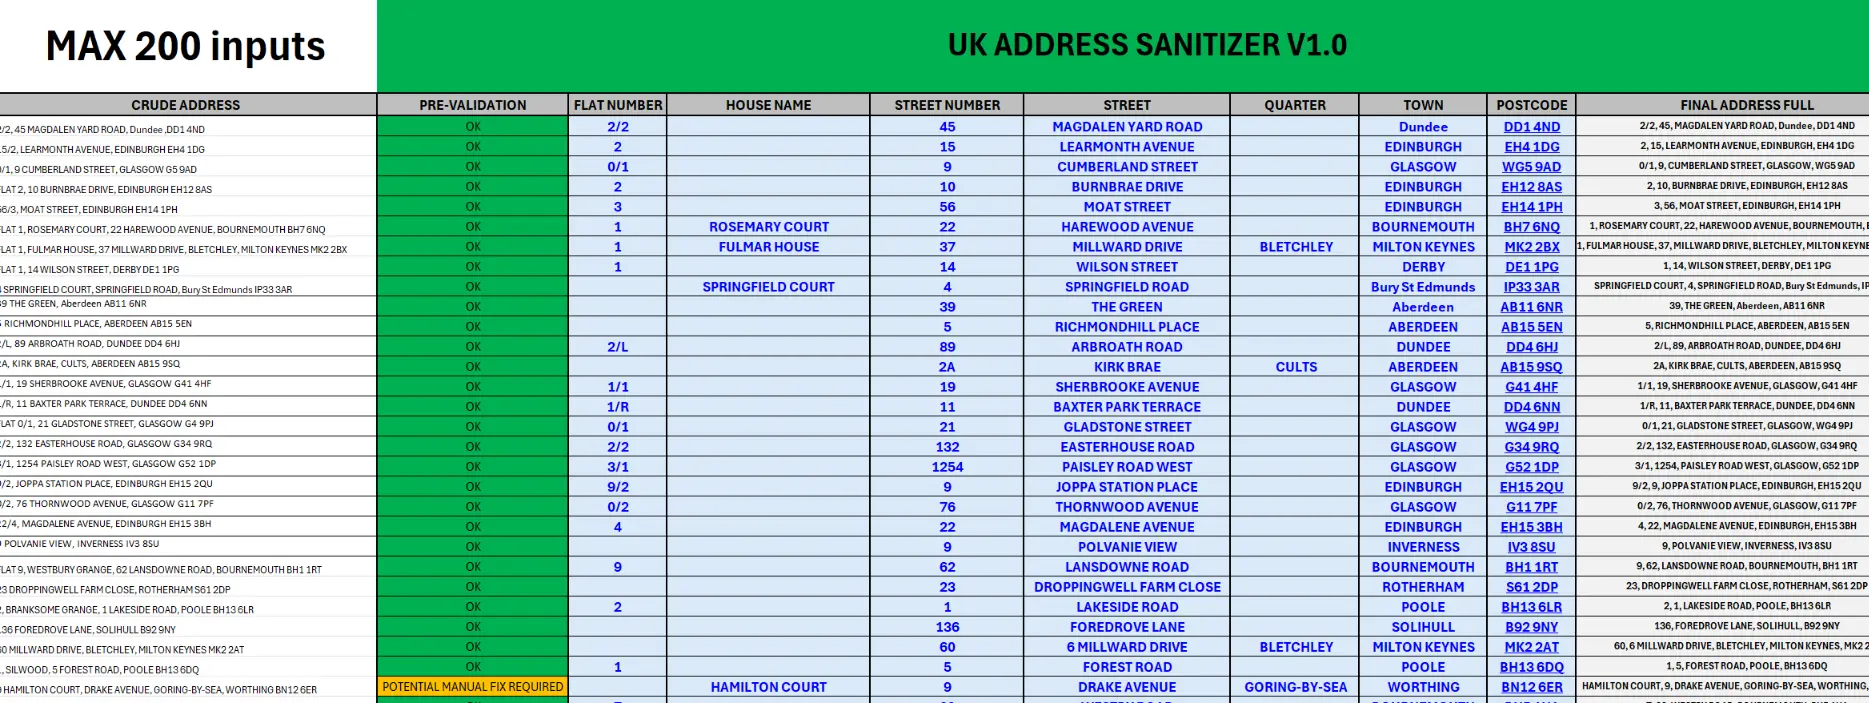 UK Address sanitizer